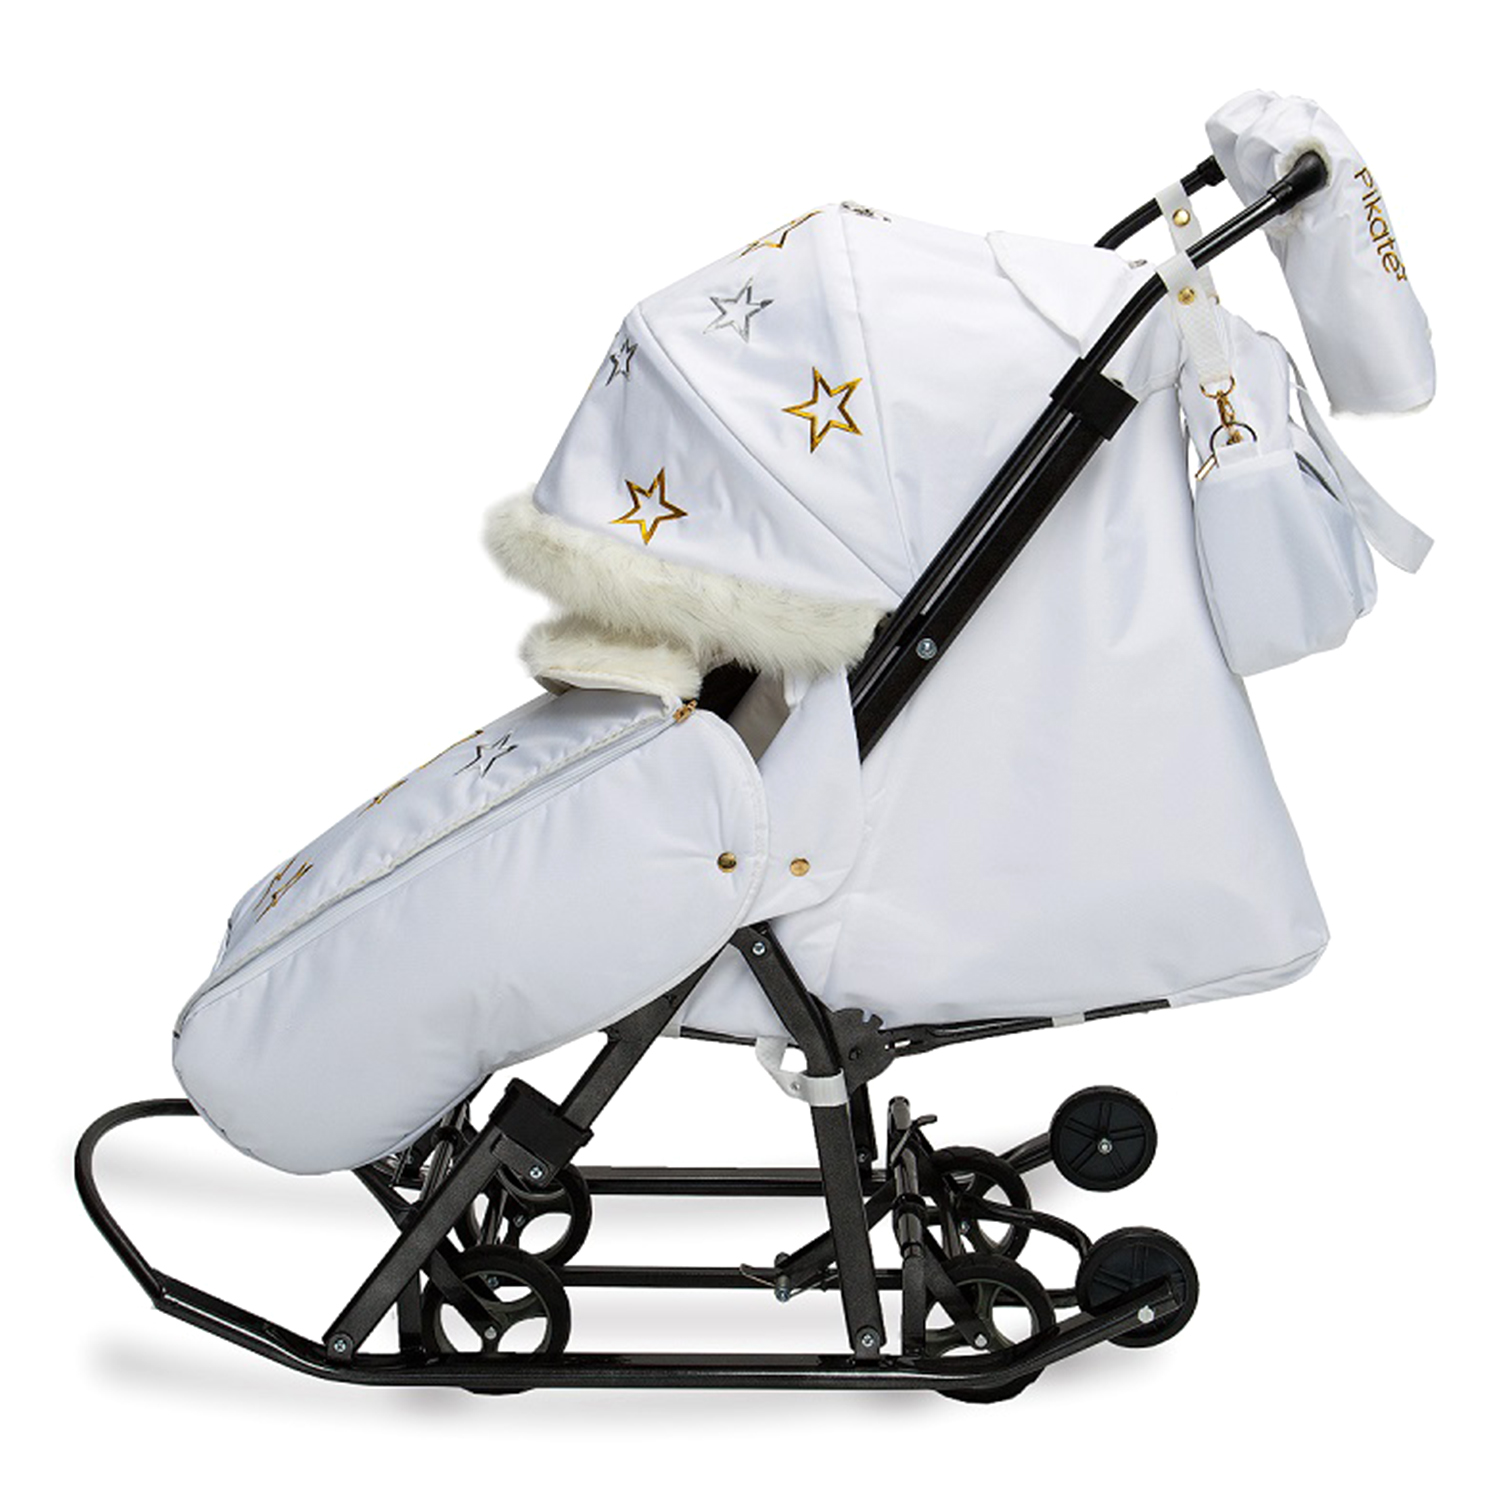 Санки-коляска Limited Edition цвет White (белый) Pikate Санки-коляска Limited Edition цвет White (белый) Pikate - фото 2